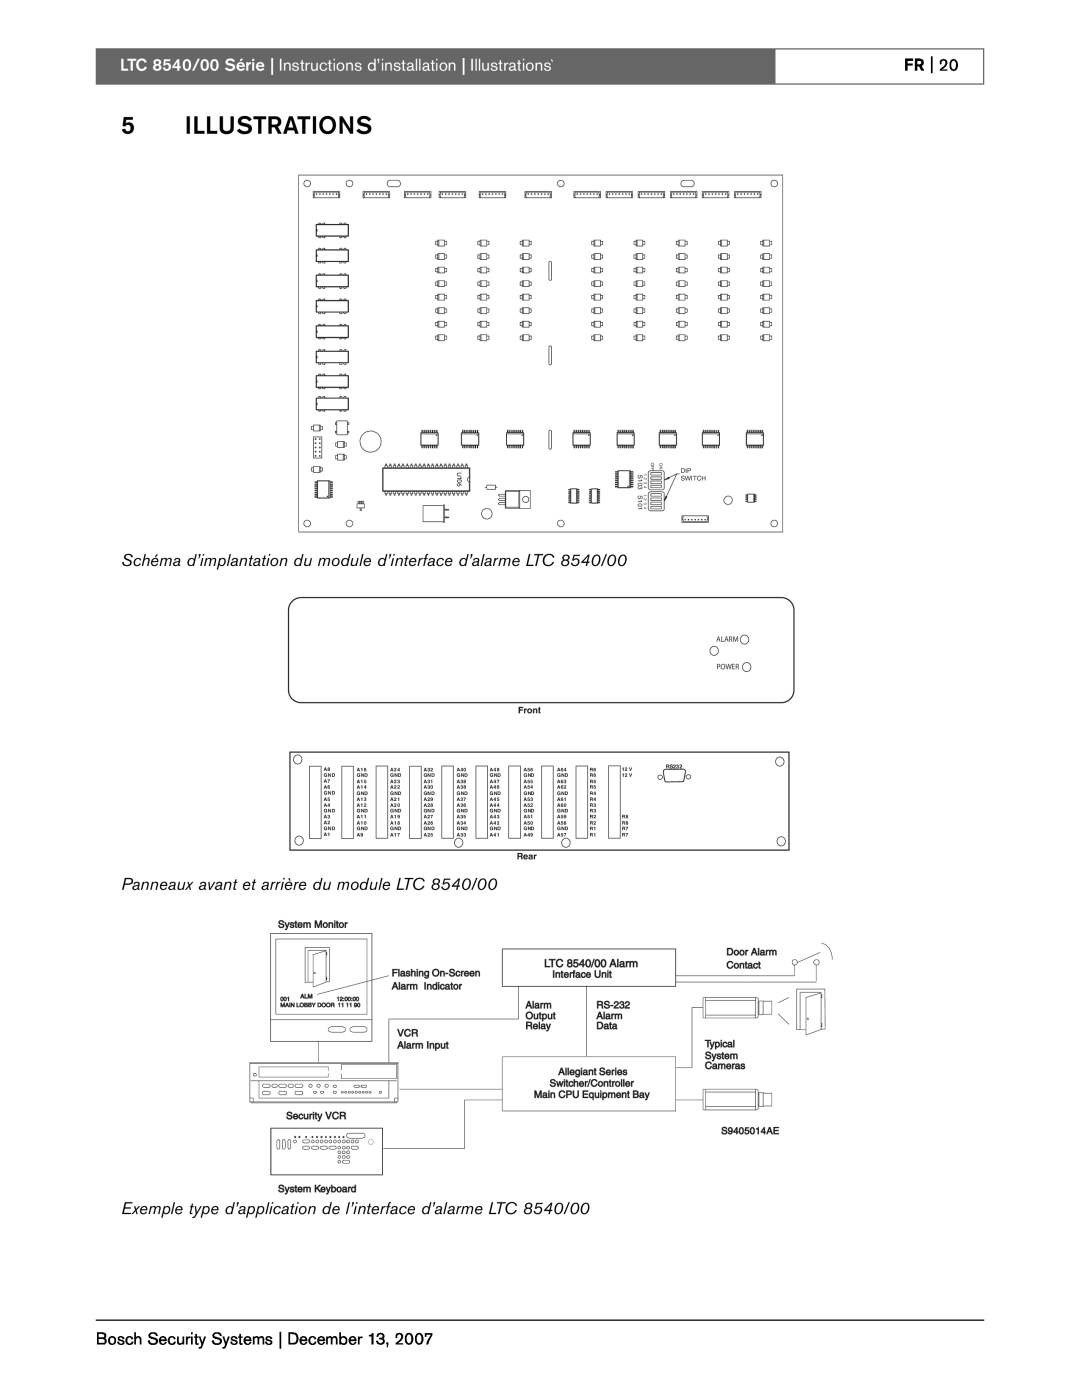 Bosch Appliances LTC 8540/00 instruction manual 5ILLUSTRATIONS, Fr 